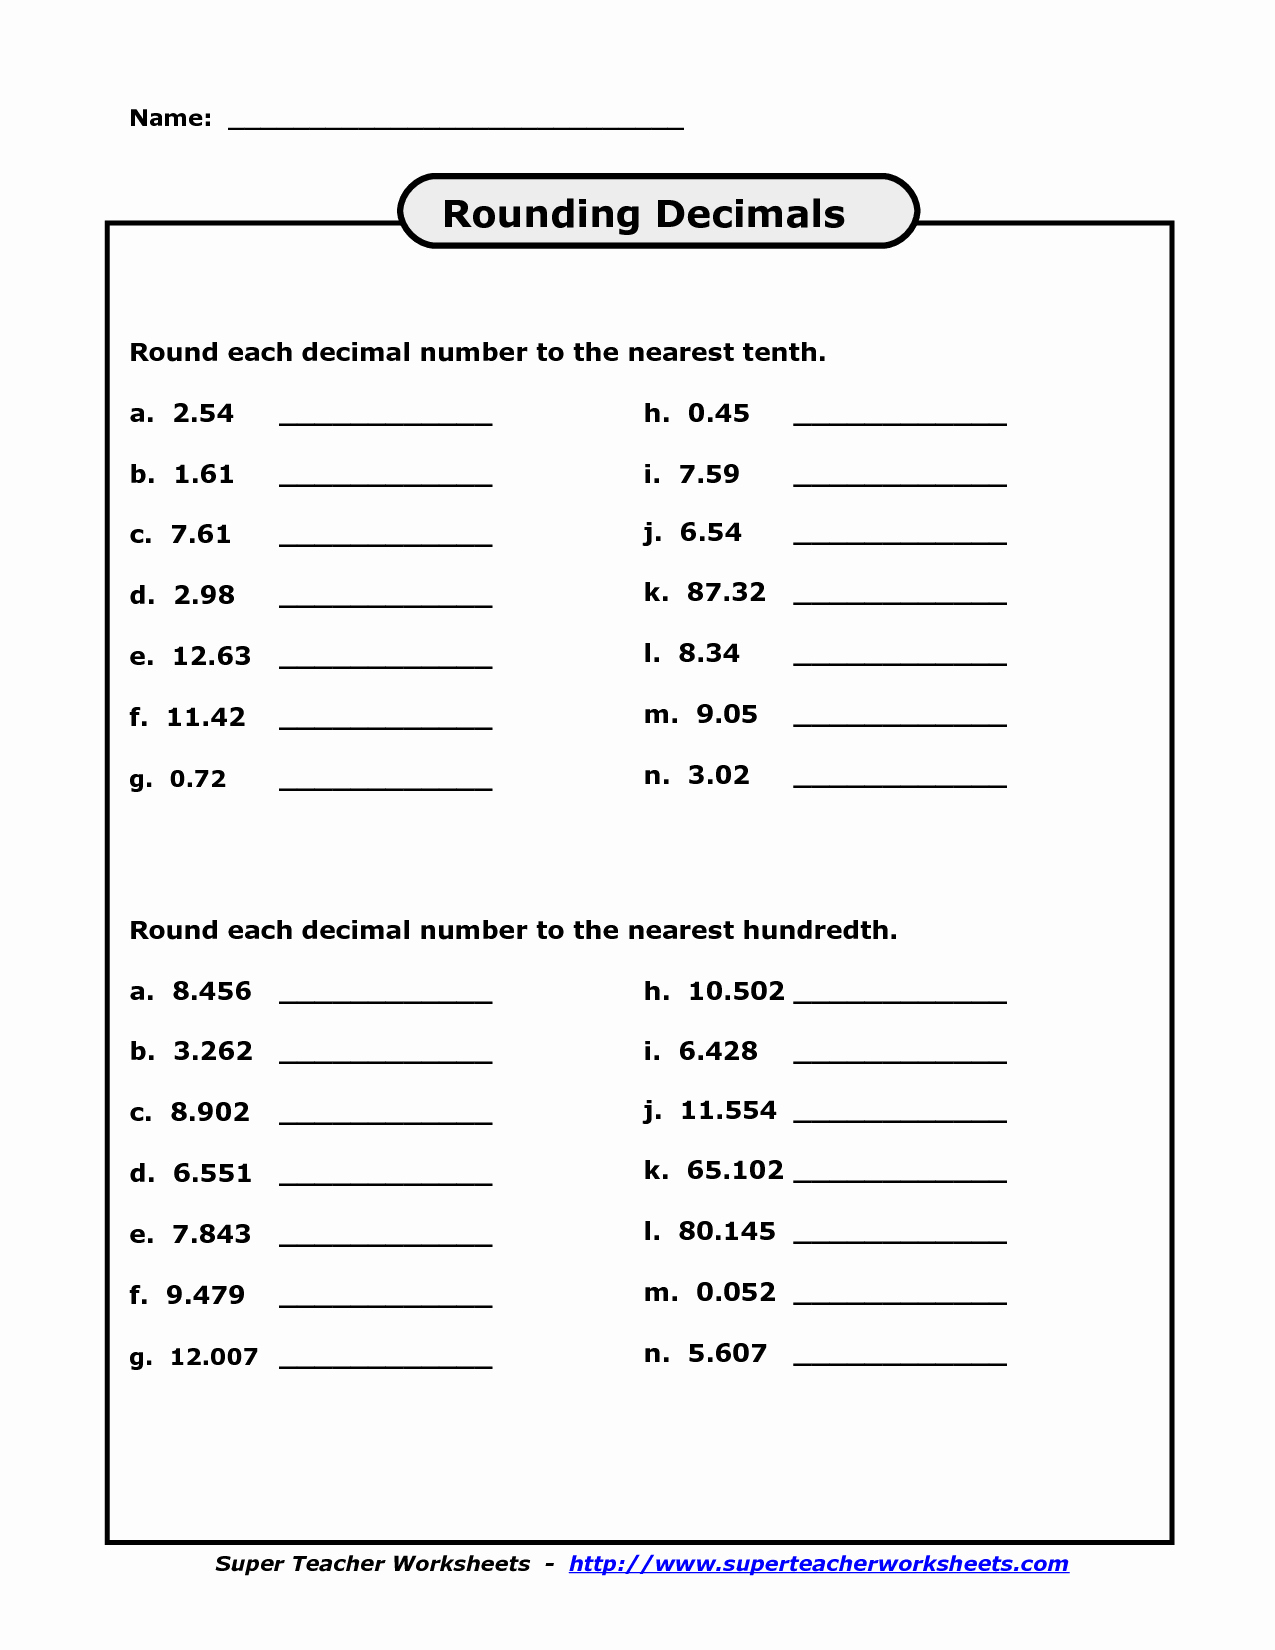 Rounding Decimals Worksheet 5th Grade Unique 5th Grade Math Worksheets Printable Hundreds Board 5th